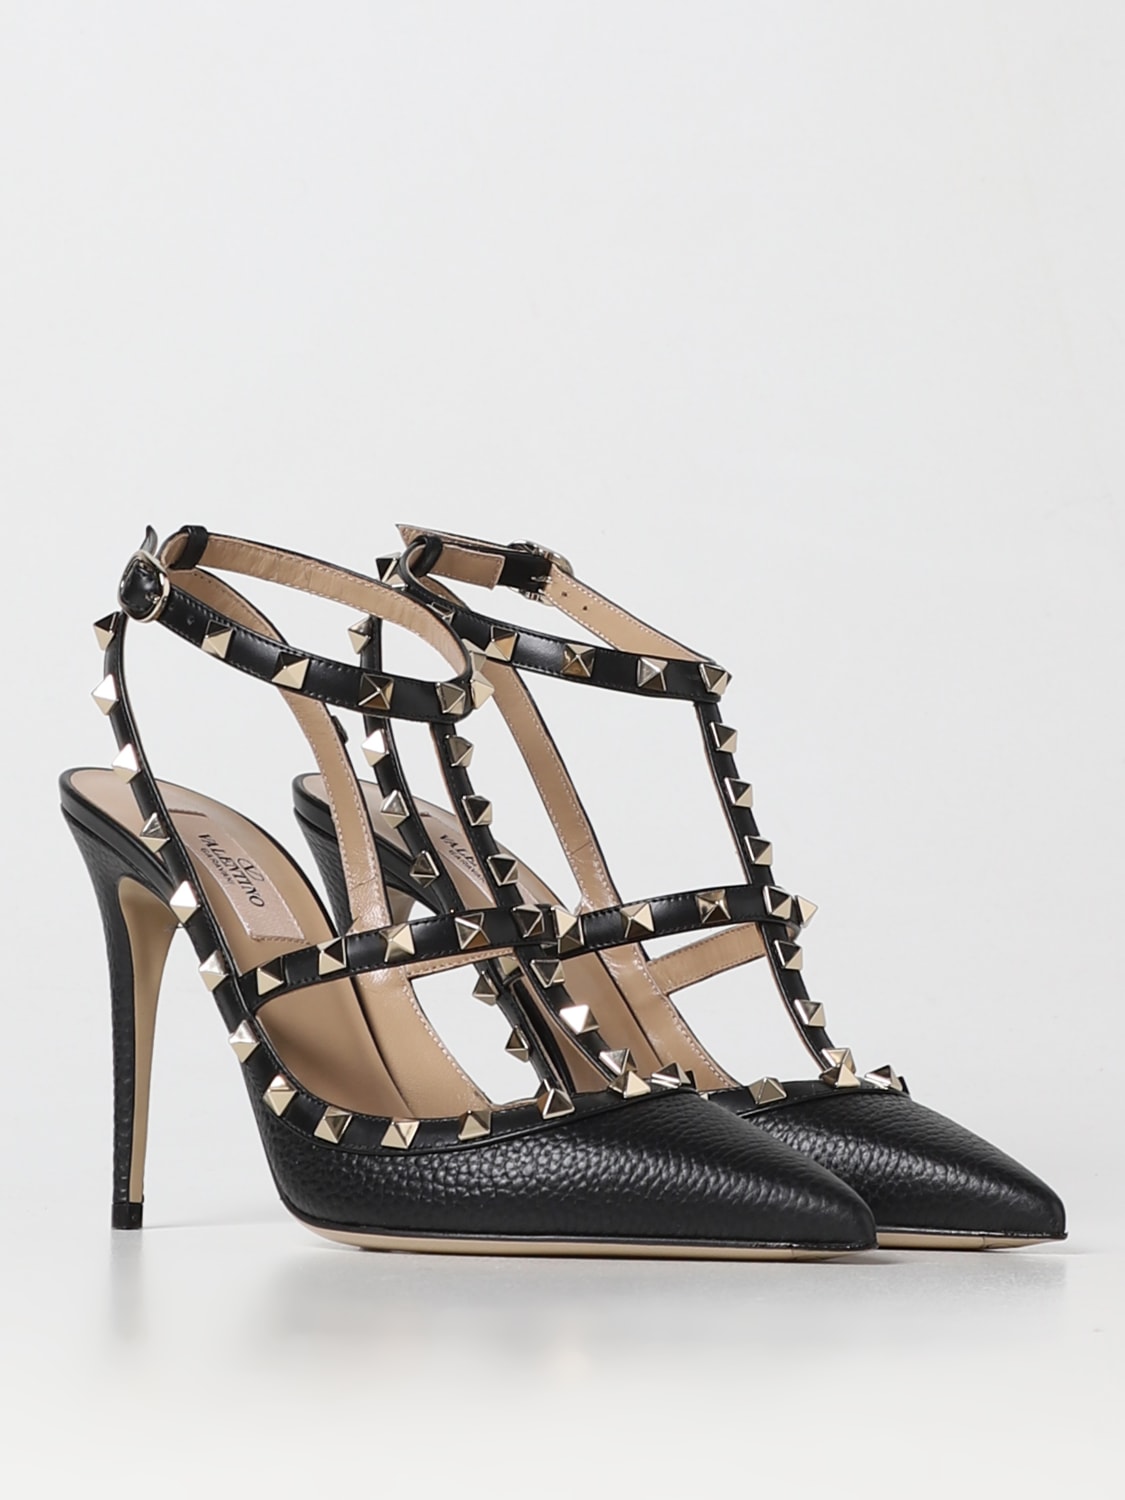 VALENTINO GARAVANI: in grained leather - Black | Valentino high heel shoes 3W2S0393VCE online at GIGLIO.COM